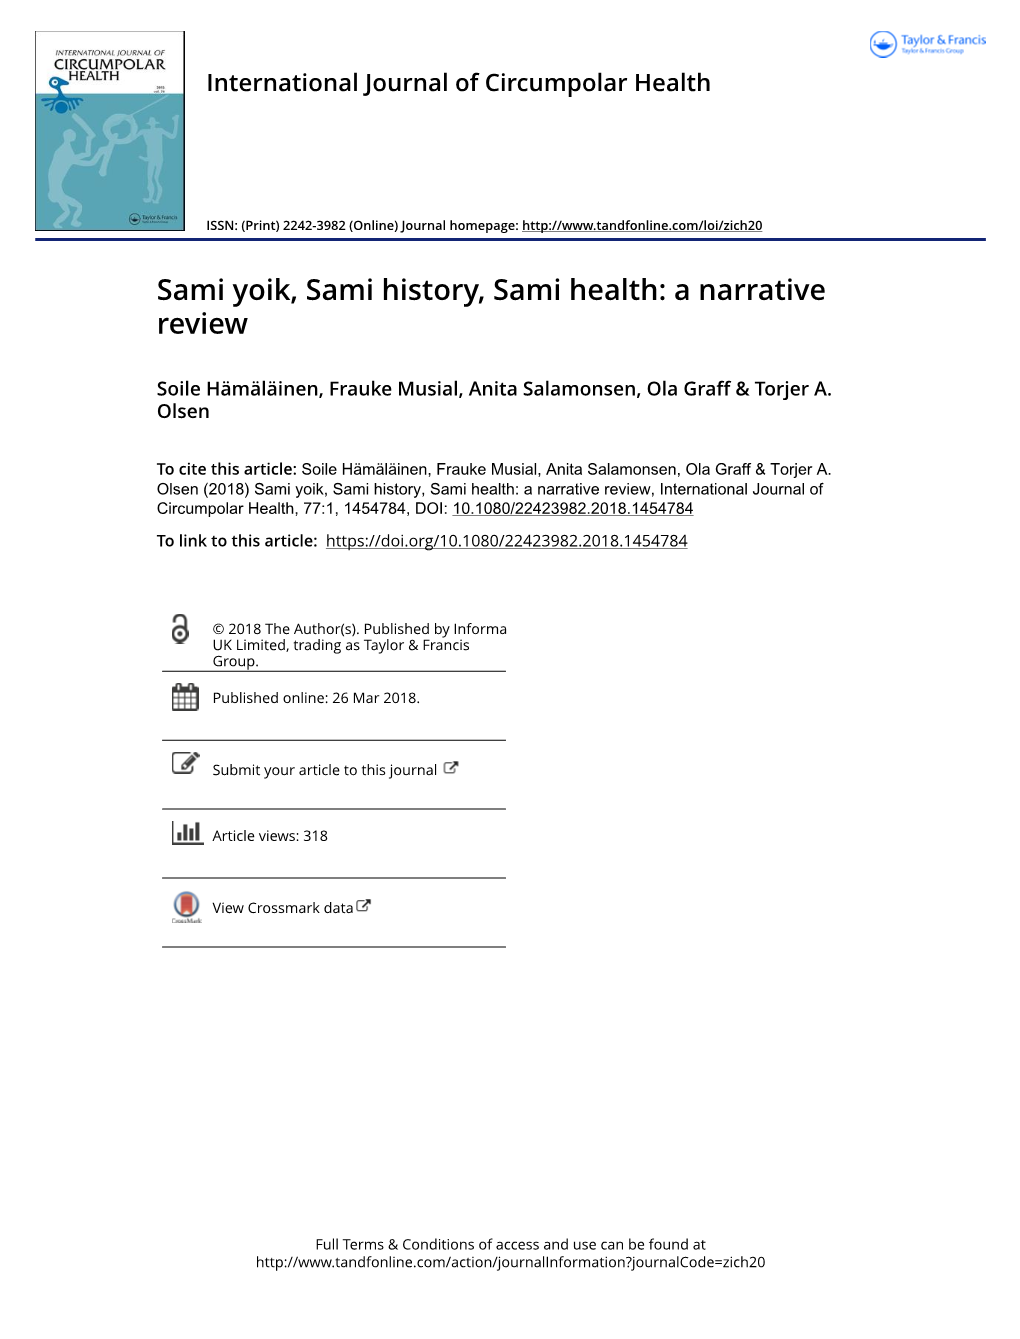 Sami Yoik, Sami History, Sami Health: a Narrative Review